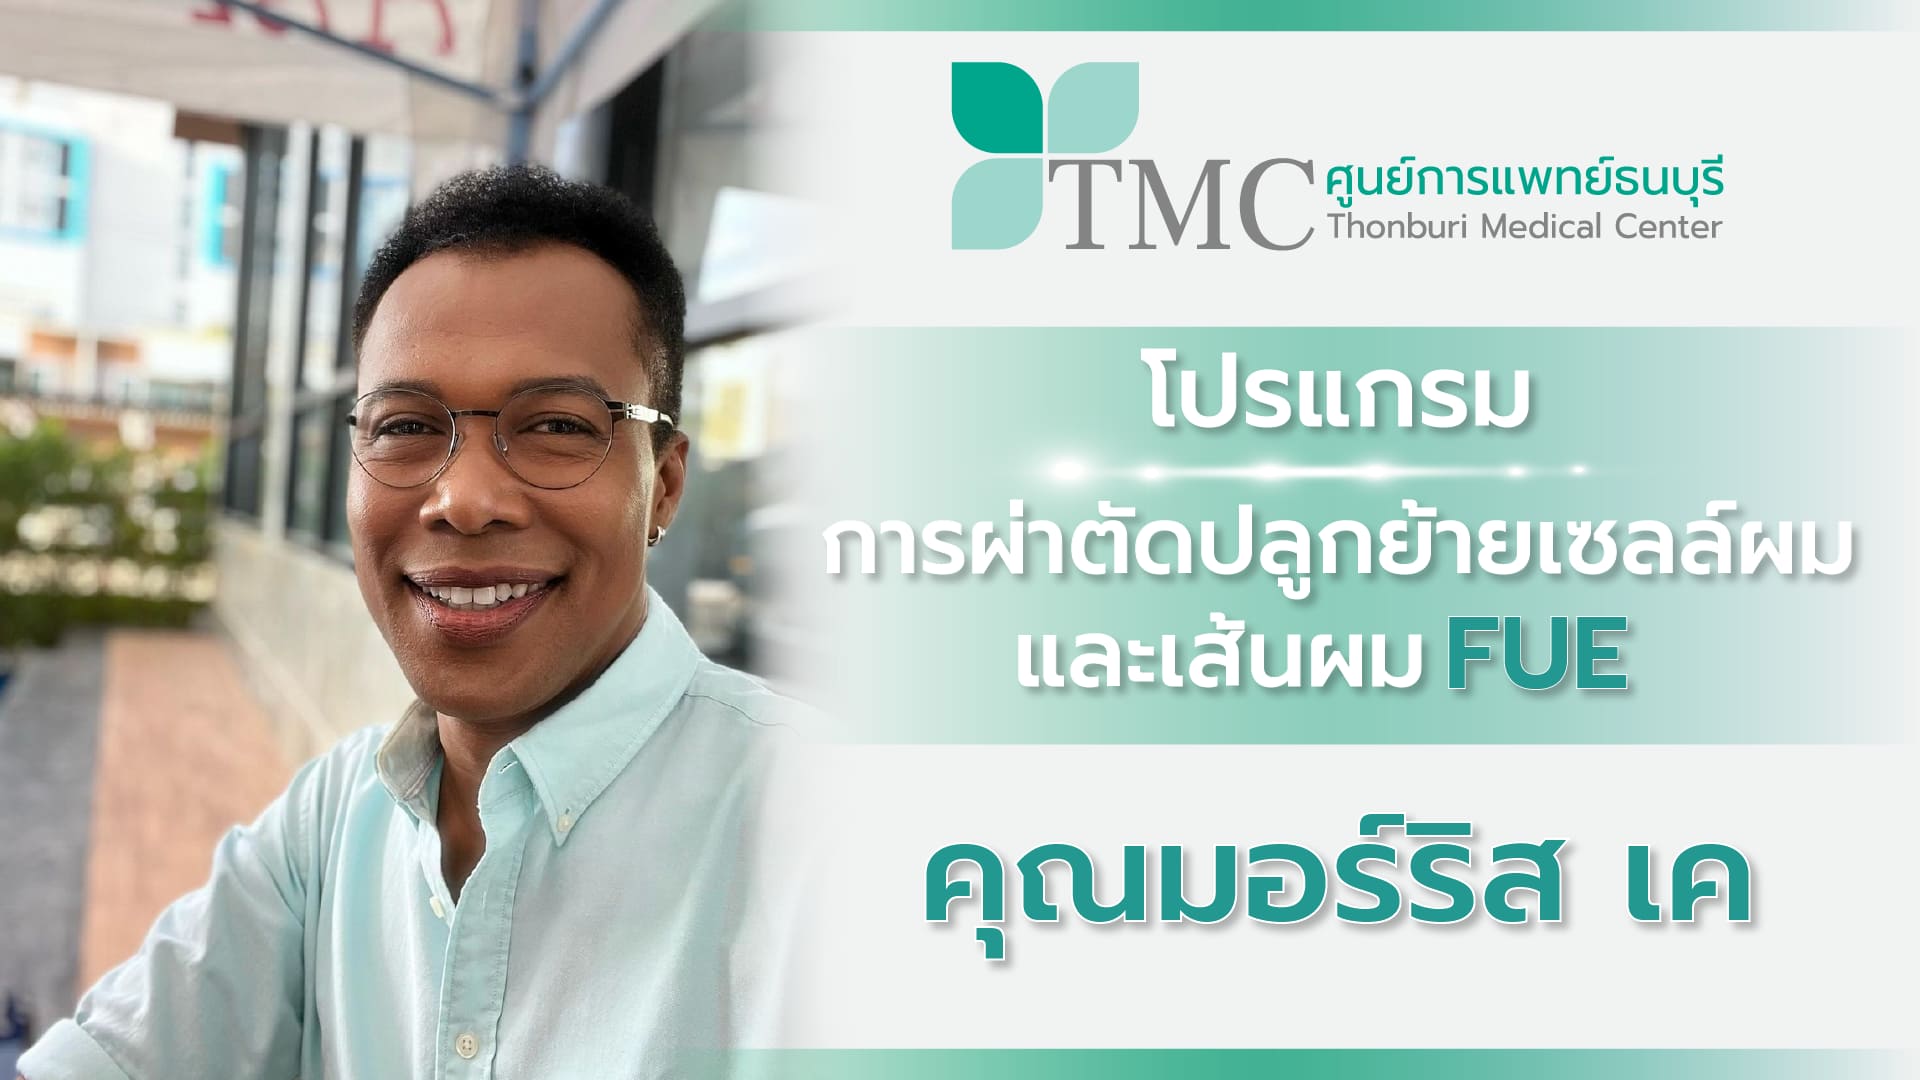 Review : K. Morris K receive a FUE Hair Transplatation at Thonburi Medical Center